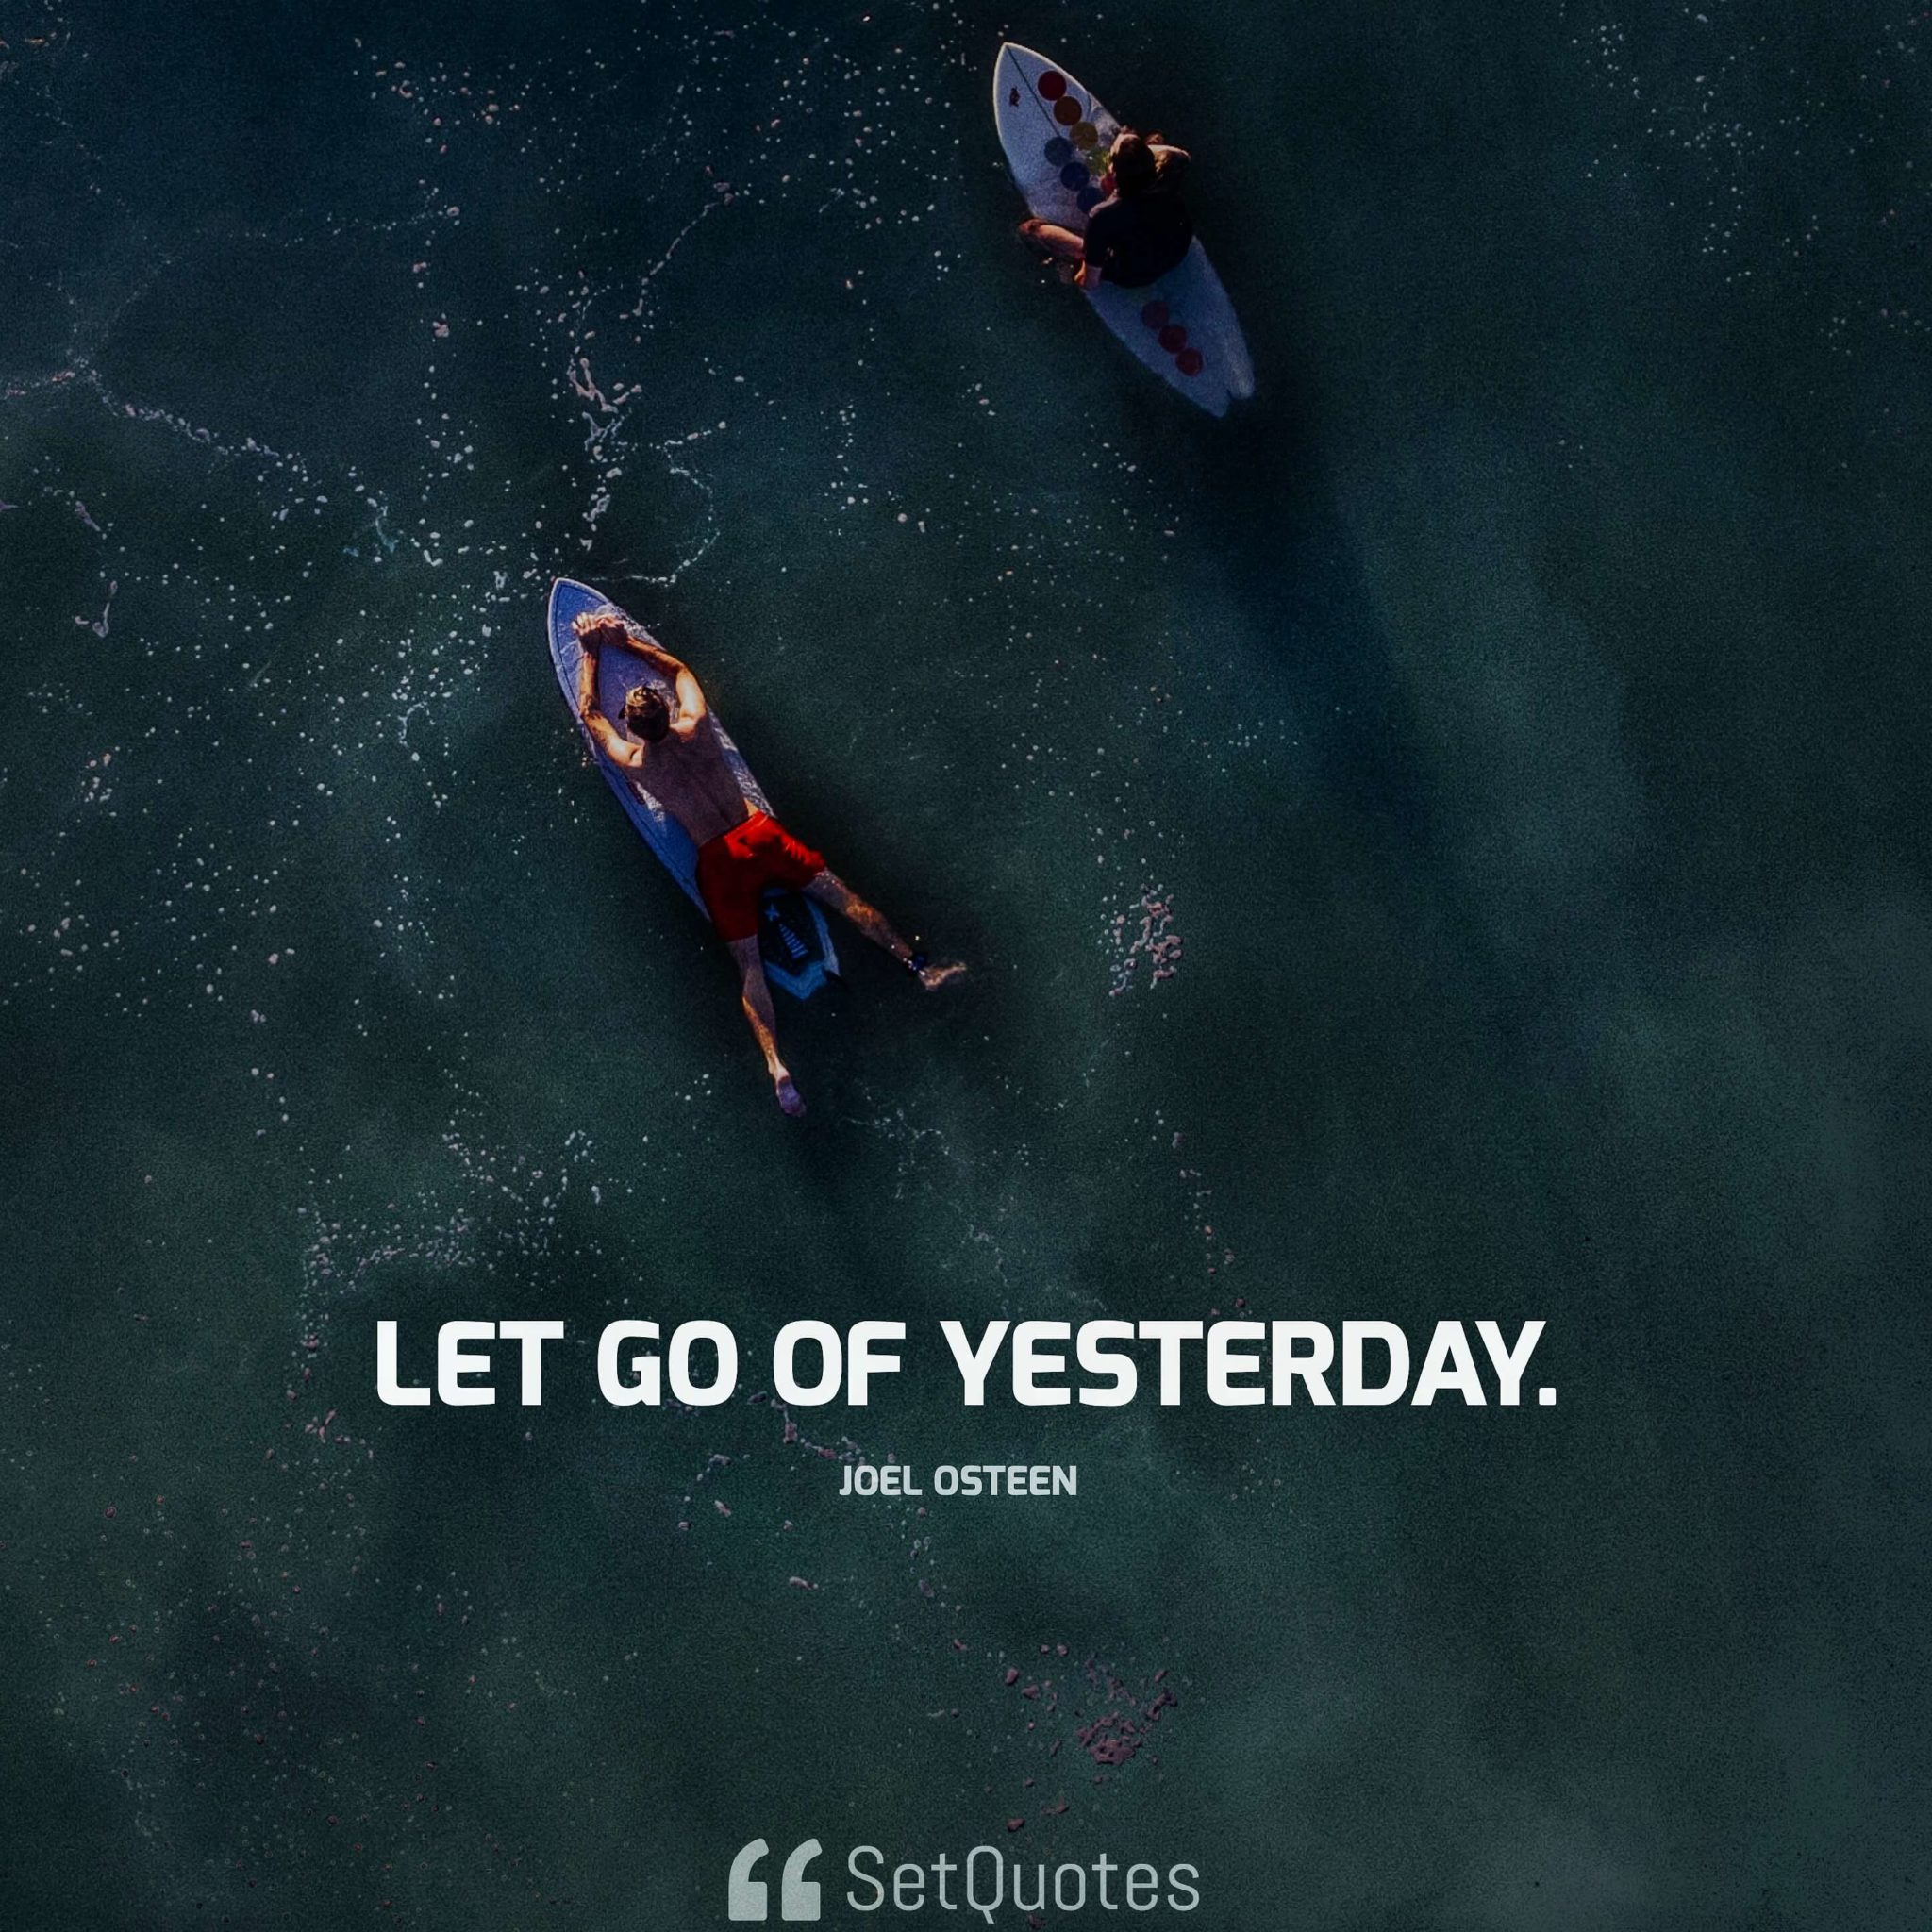 Let go of yesterday. - Joel Osteen